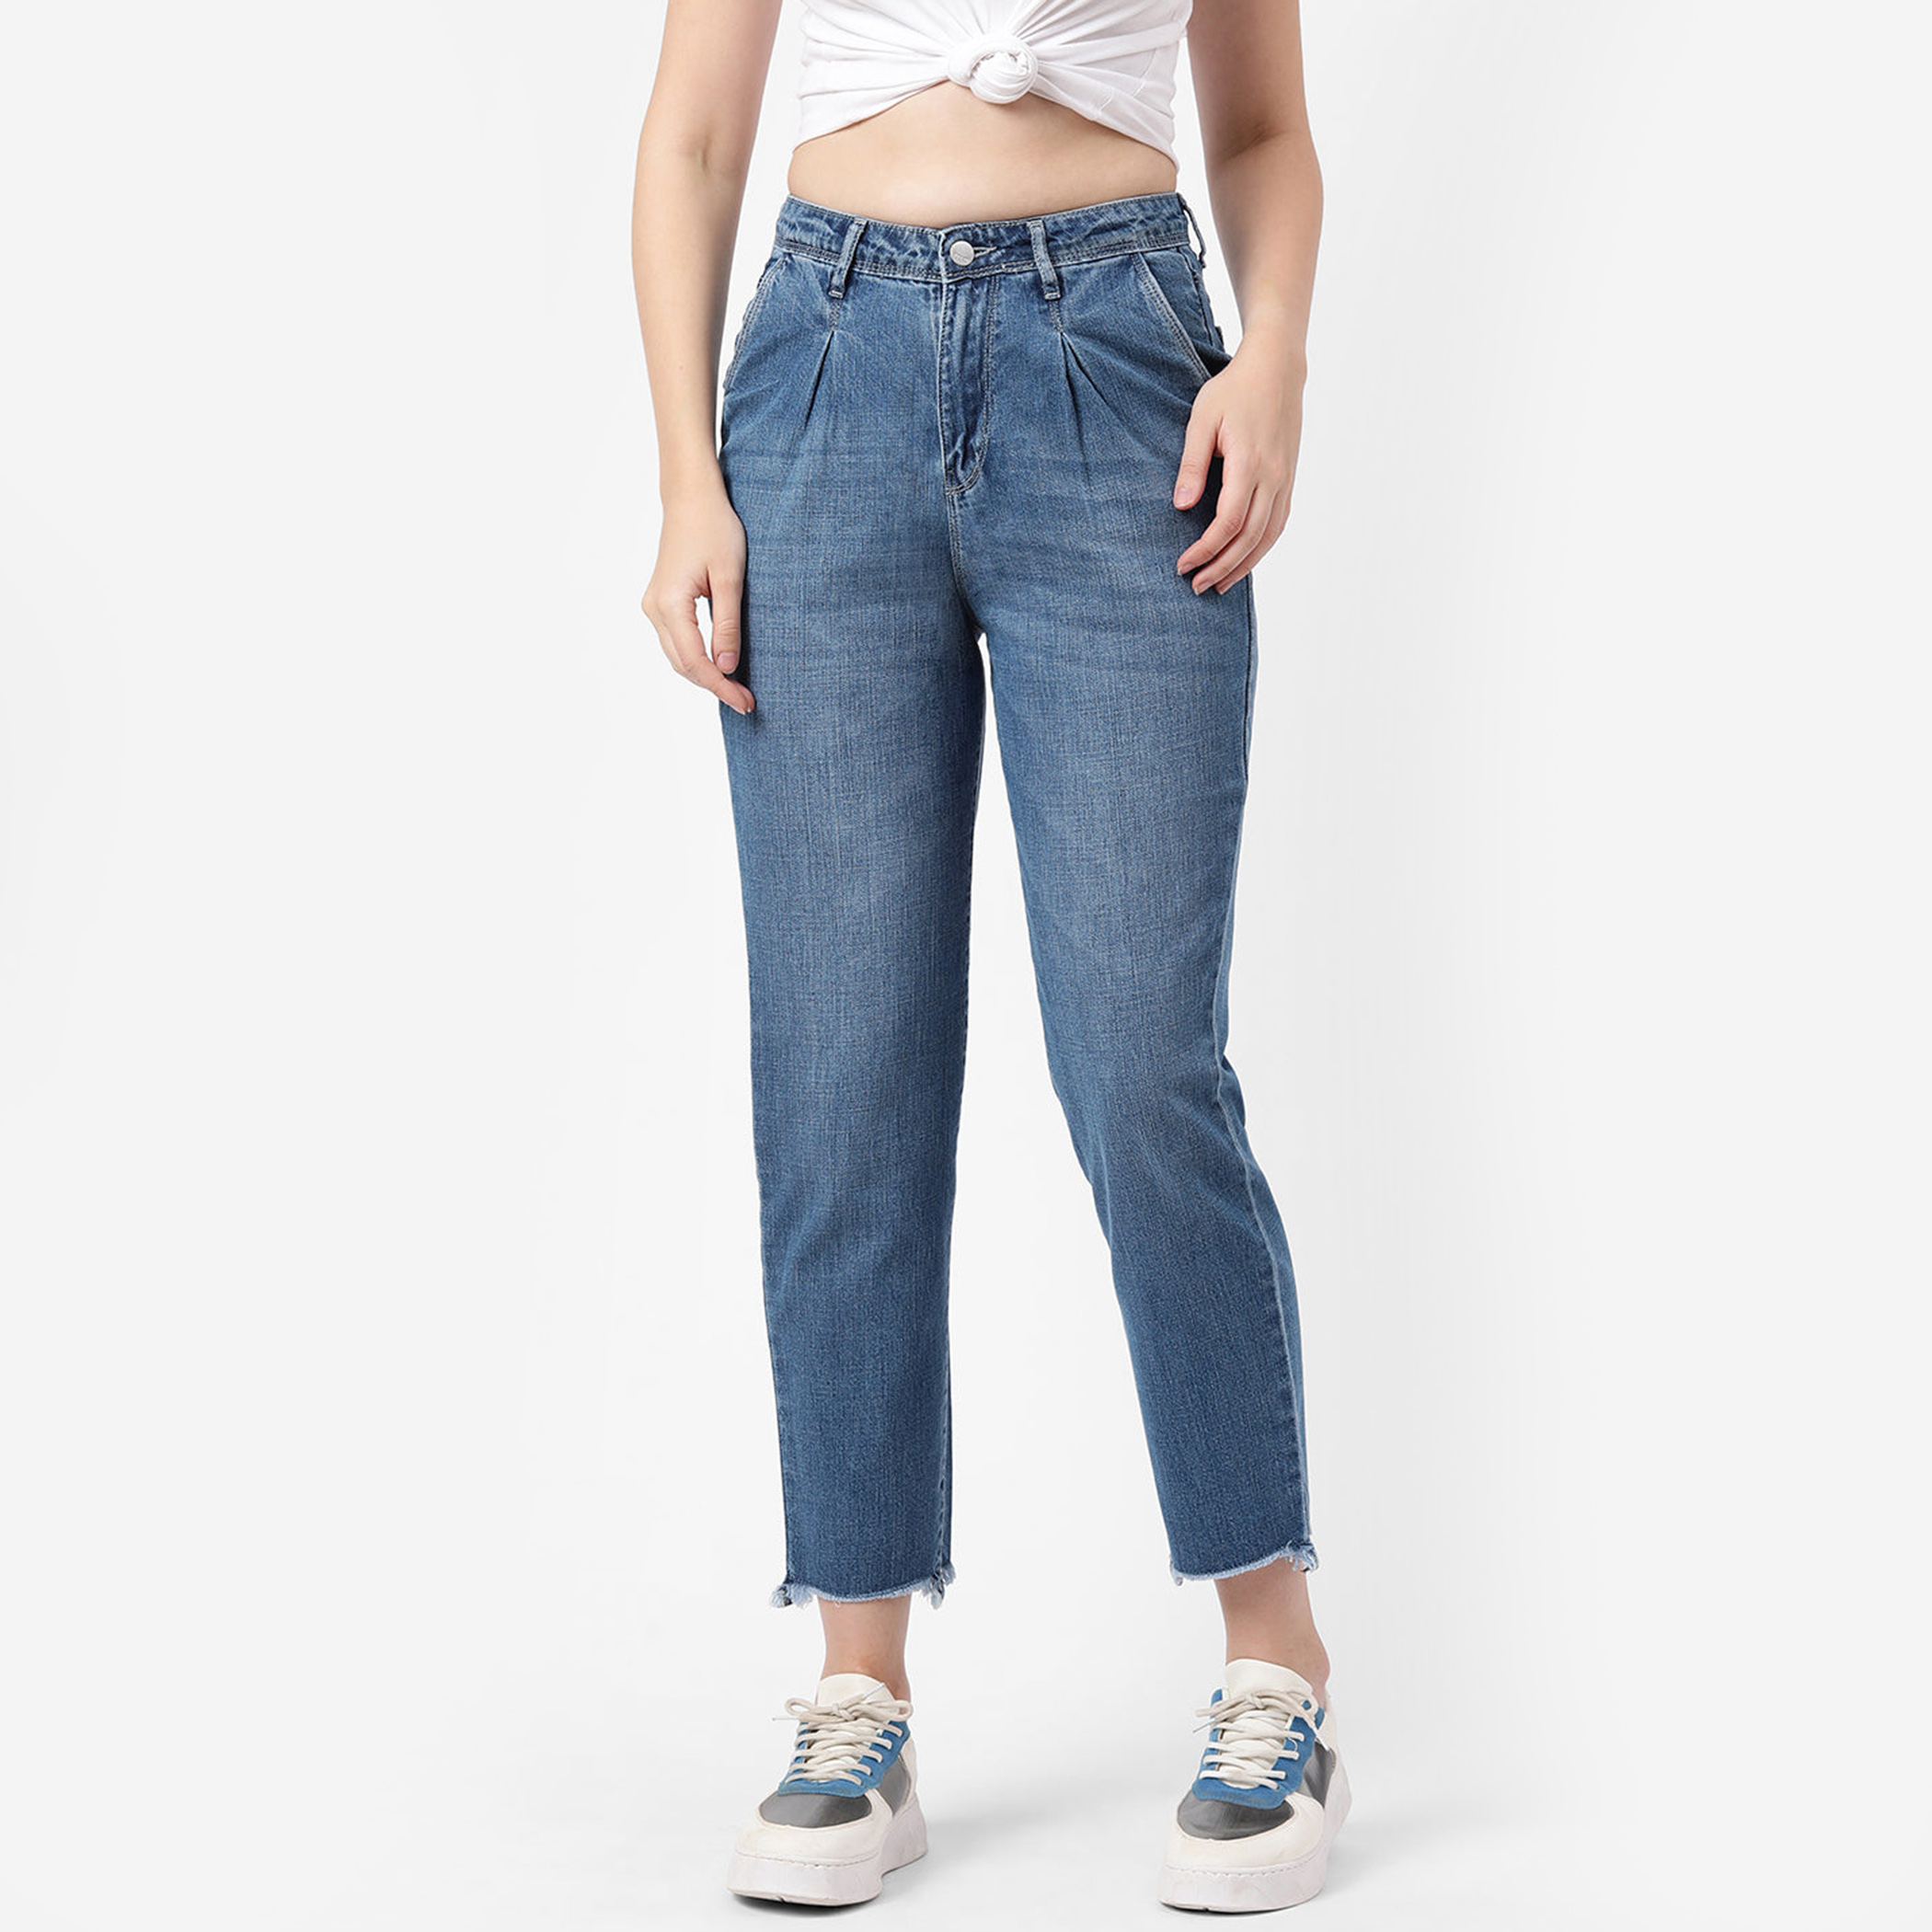 KRAUS Women Solid Regular Fit Jeans